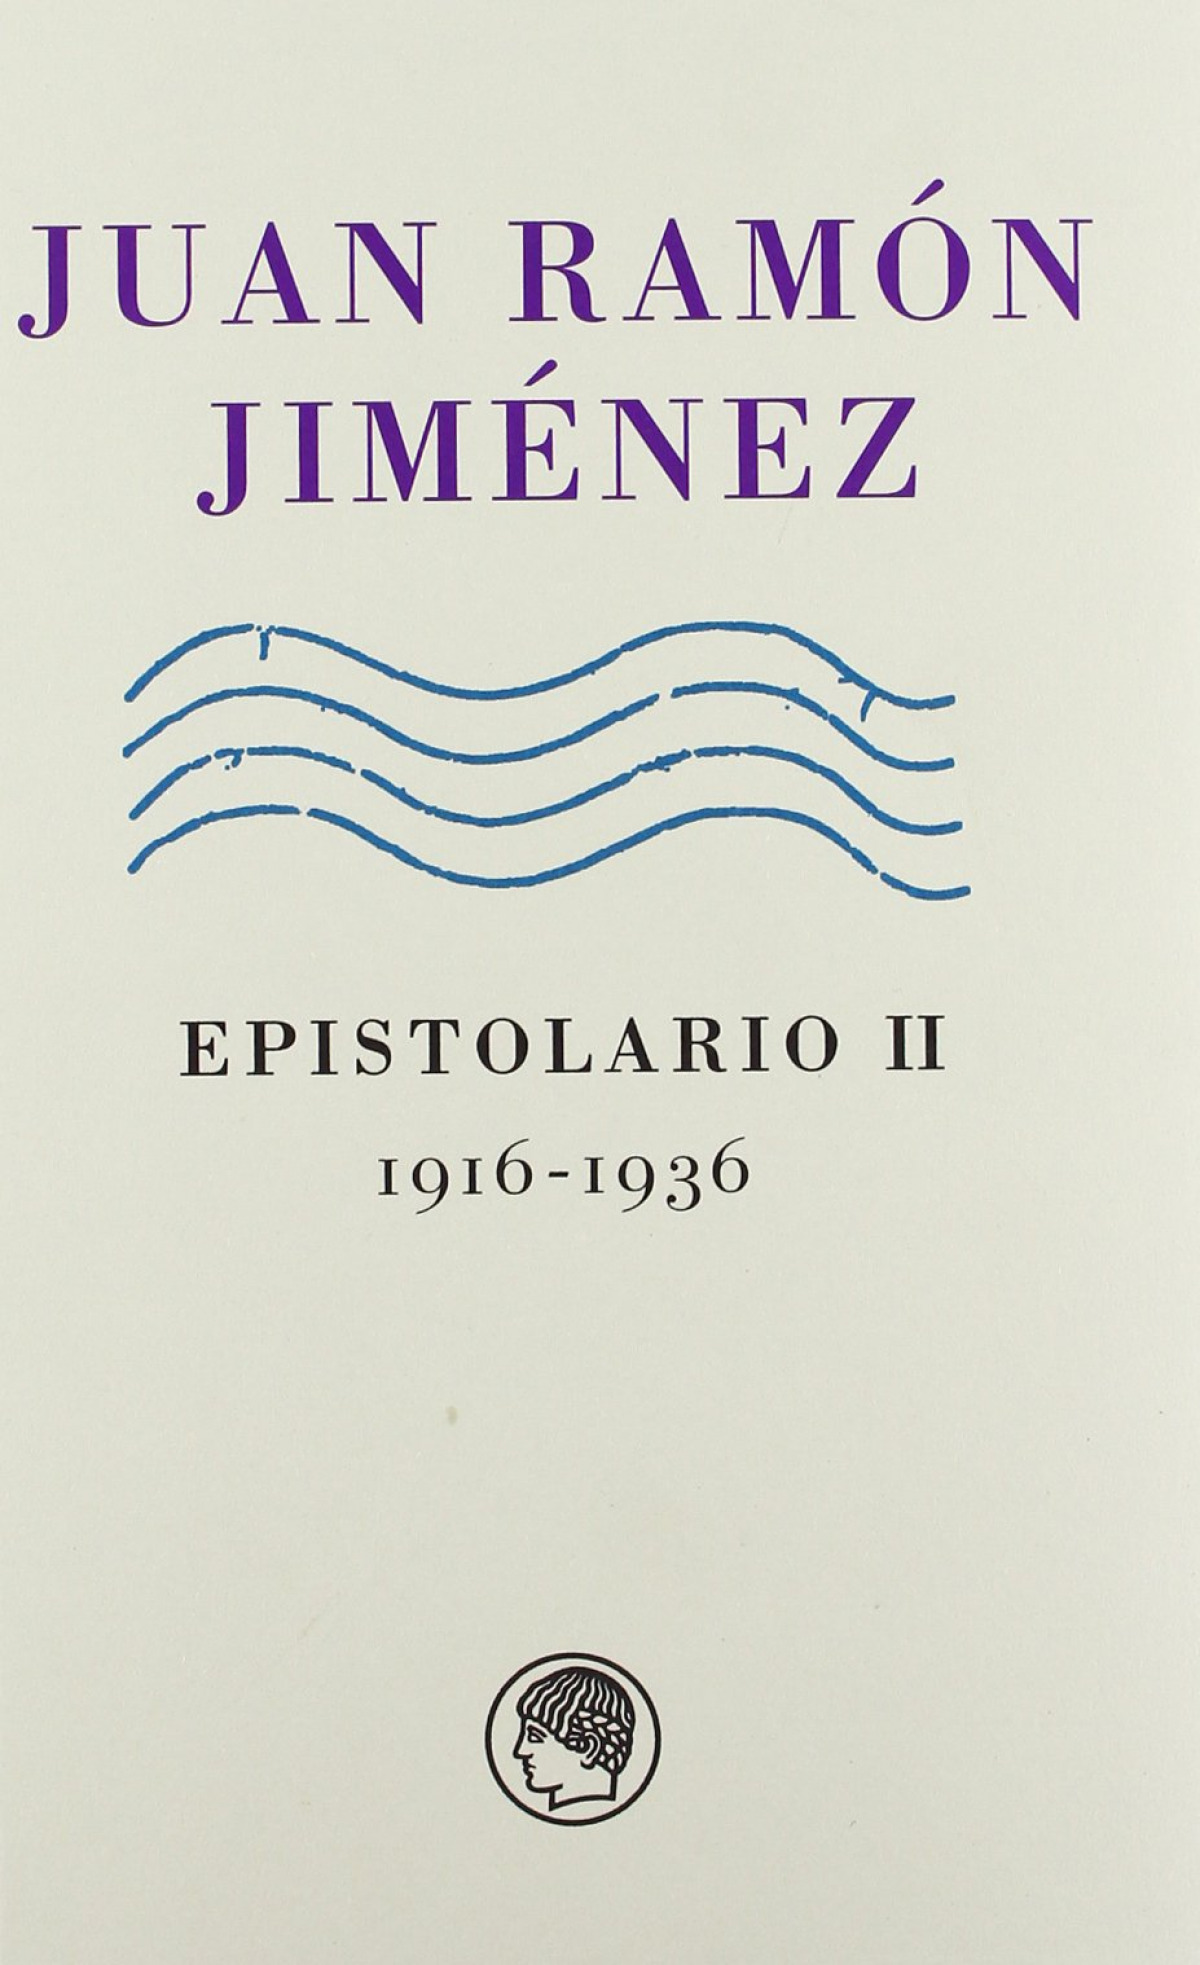 Epistolario ii. 1916-1936 - Jimenez, Juan Ramon